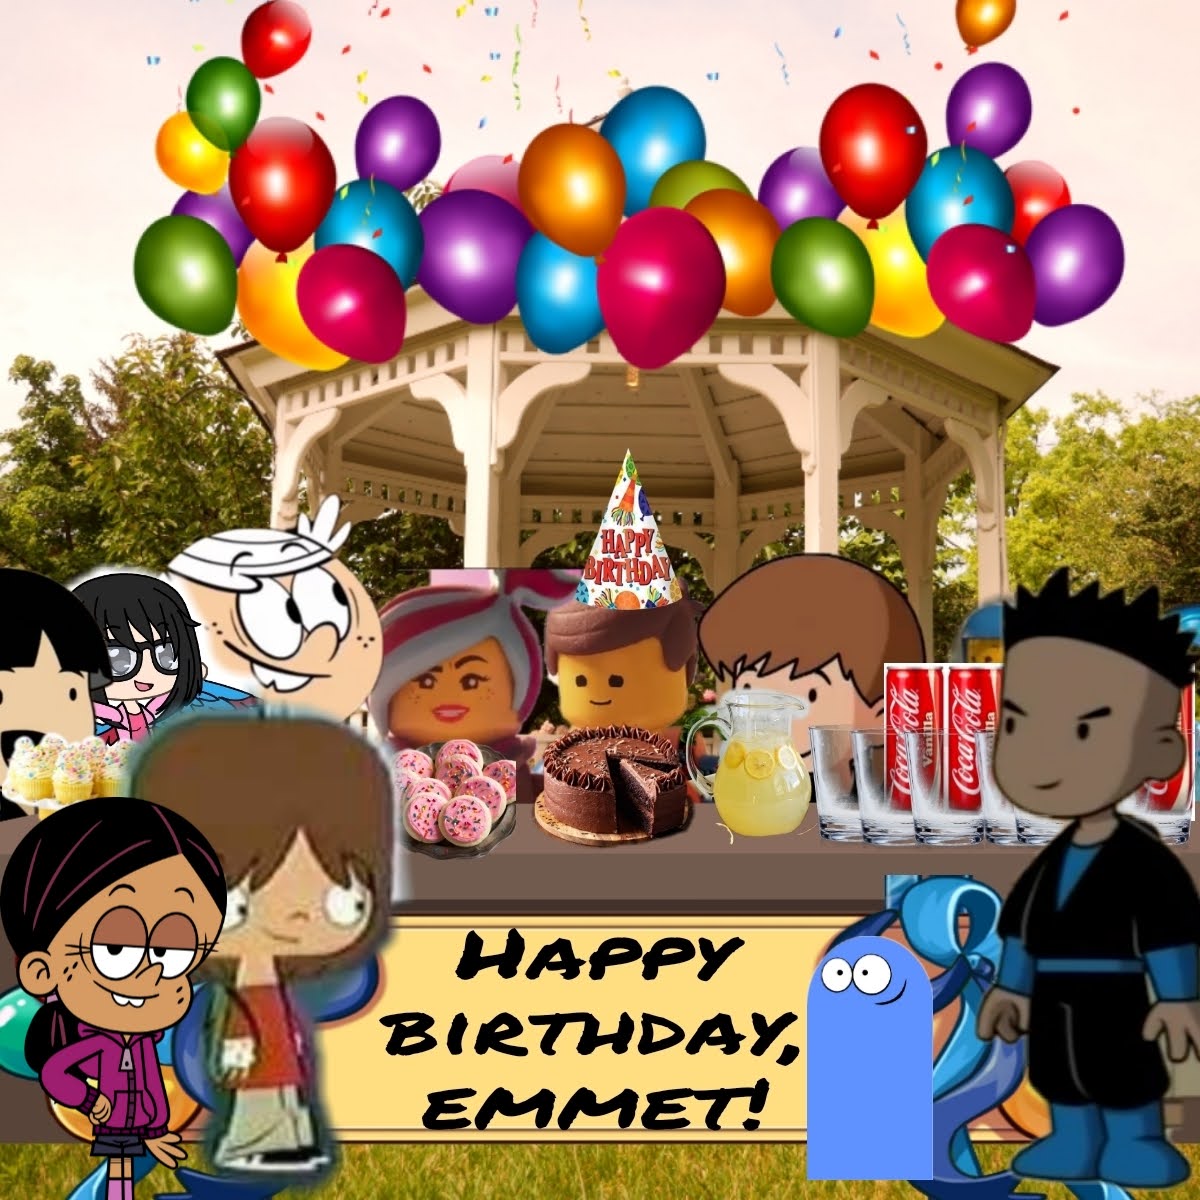 Emmet's birthday party by Samracheltang88 on DeviantArt